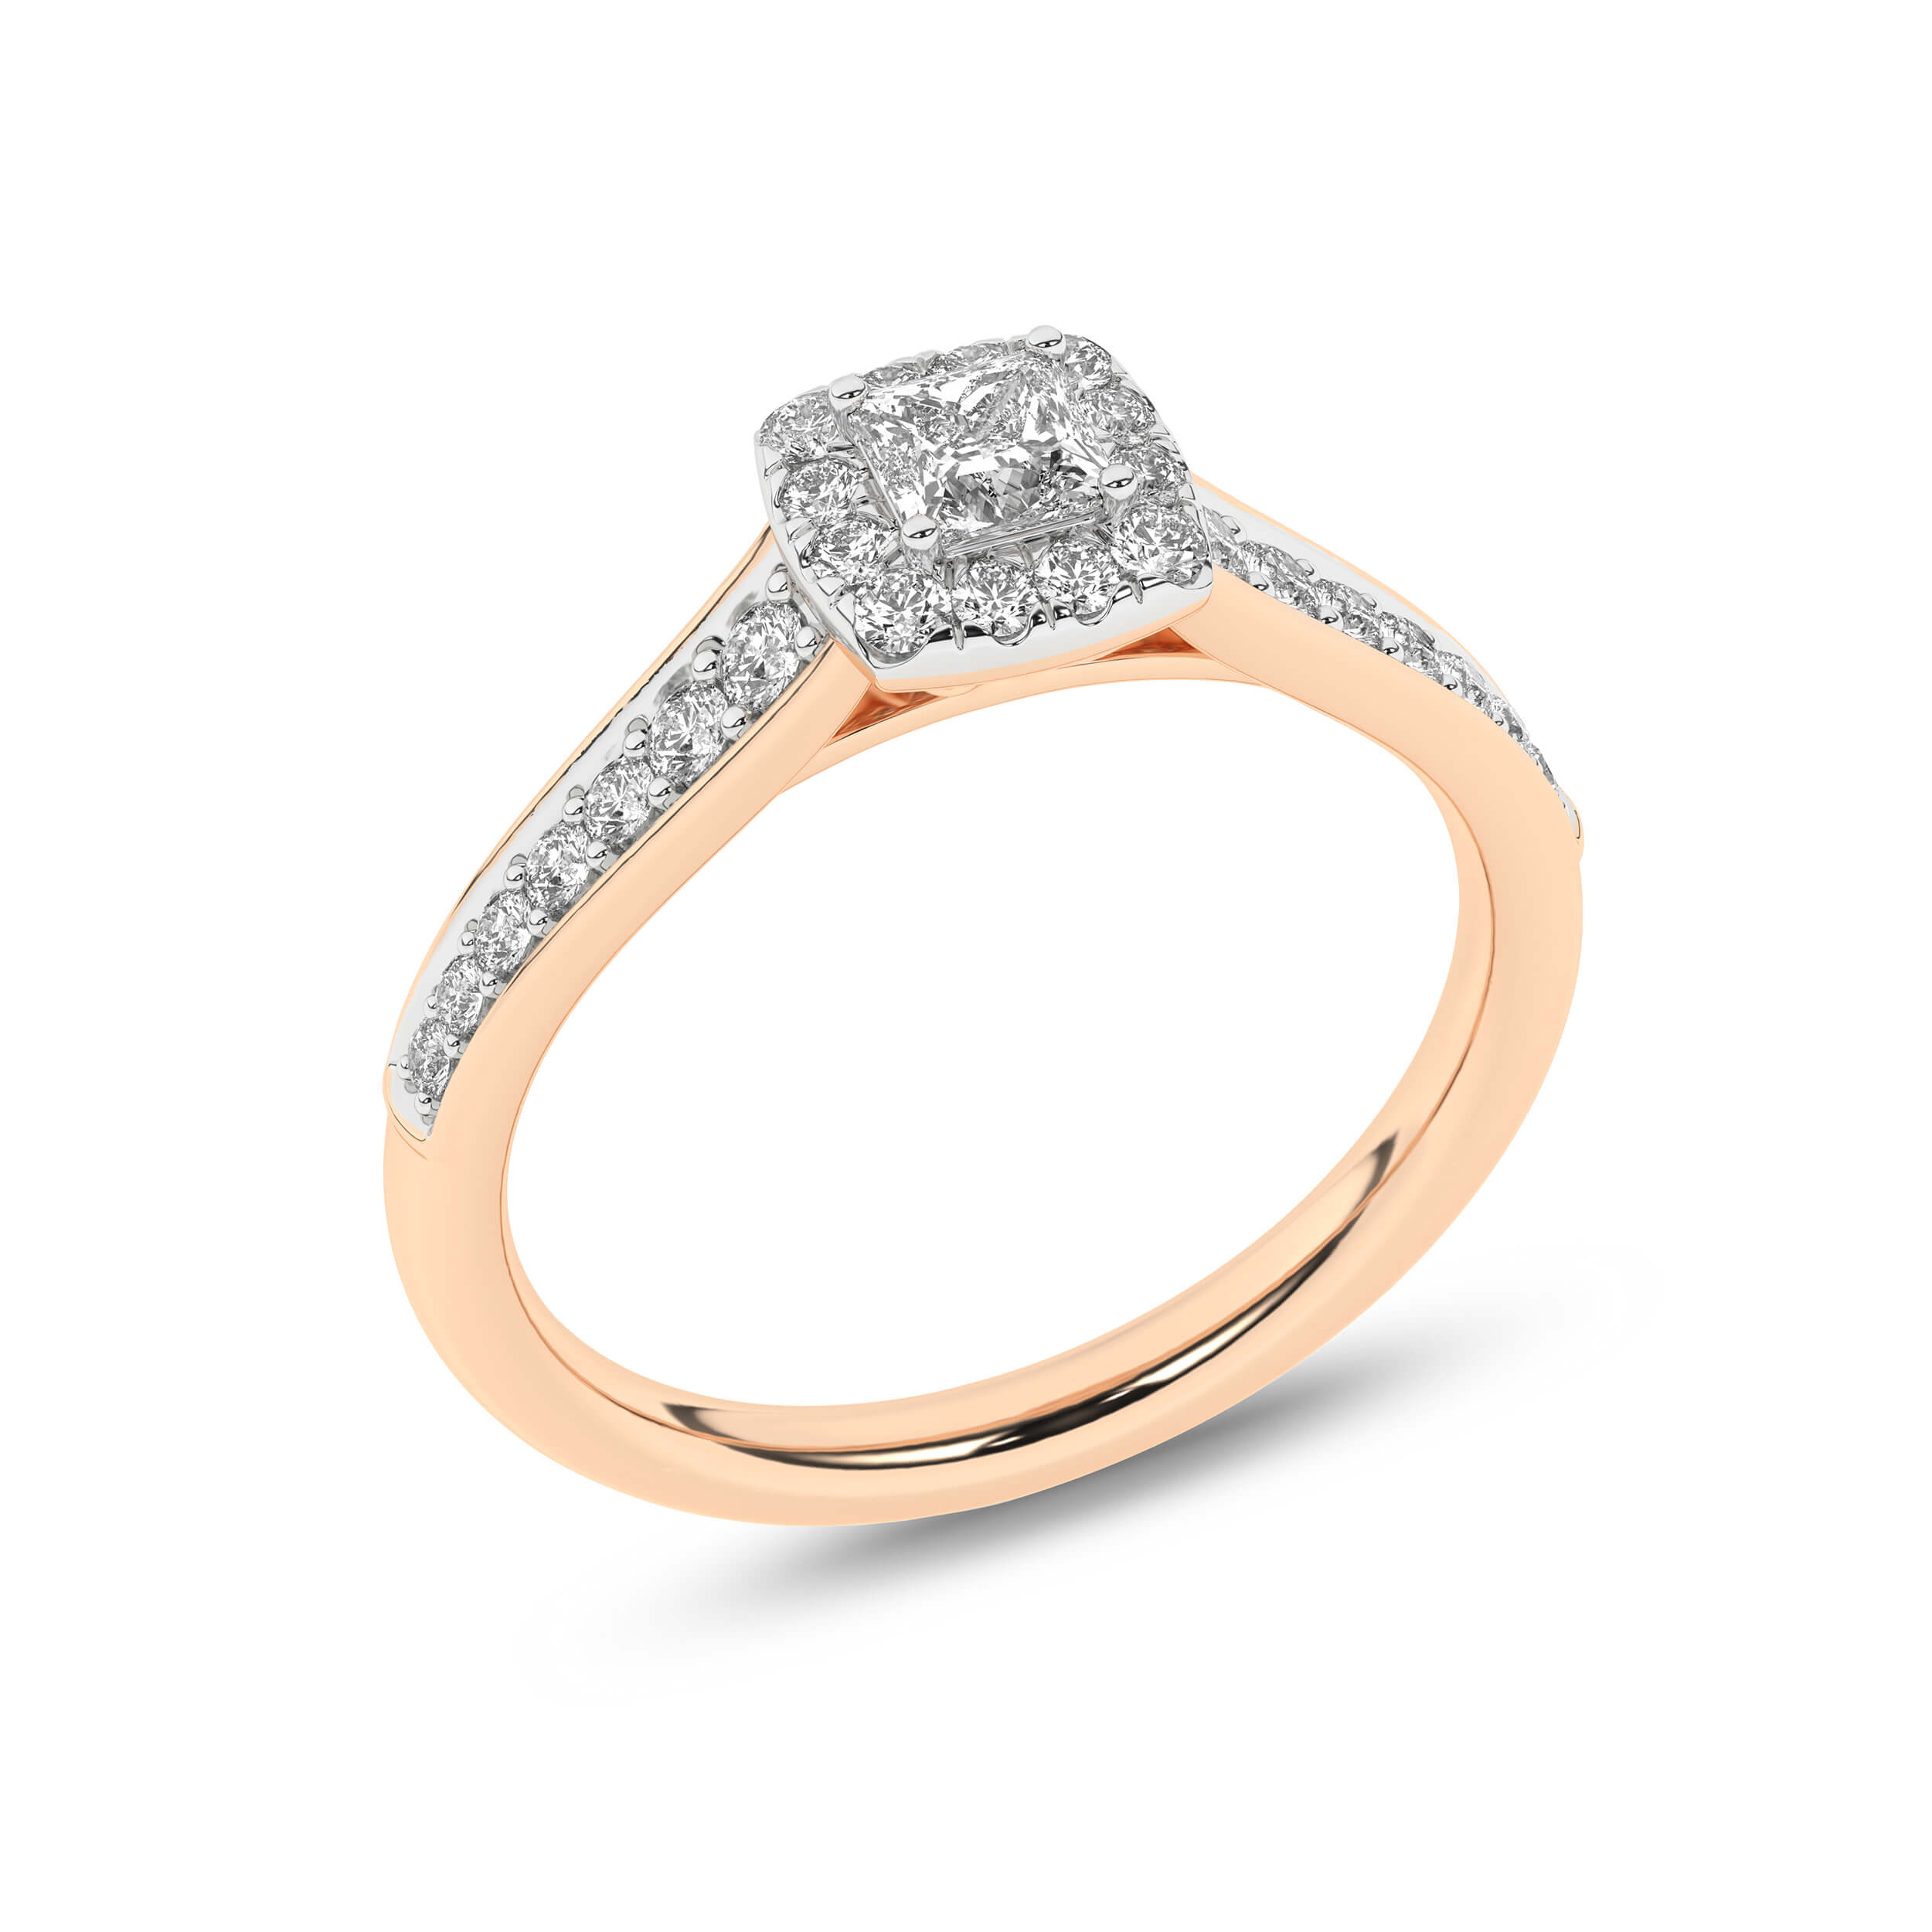 Inel de logodna din Aur Roz 14K cu Diamante 0.50Ct, articol RB17644EG, previzualizare foto 4